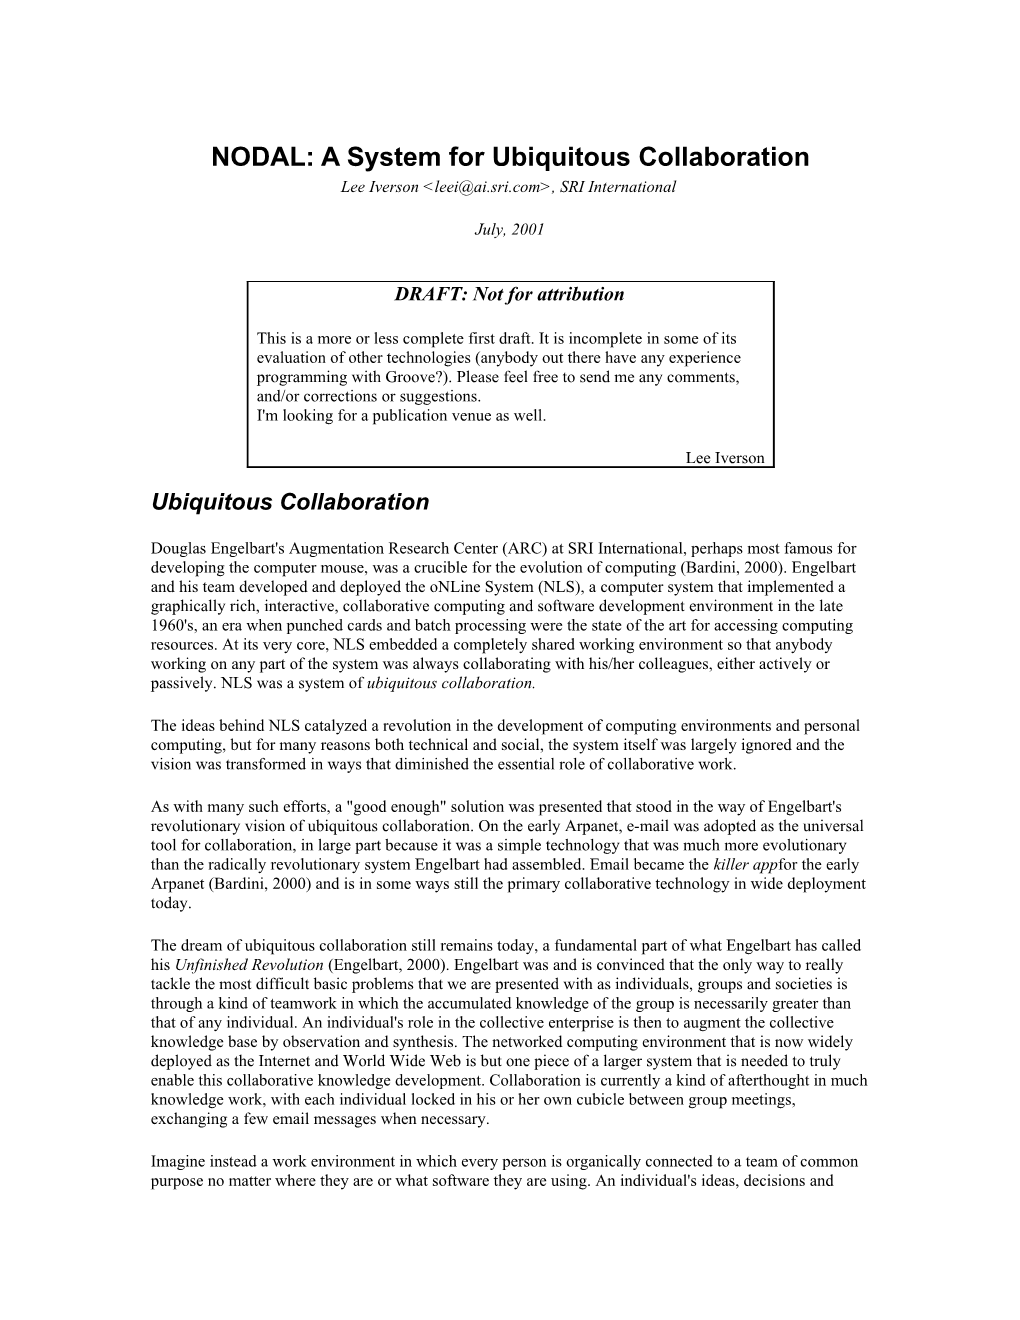 NODAL: a System for Ubiquitous Collaboration